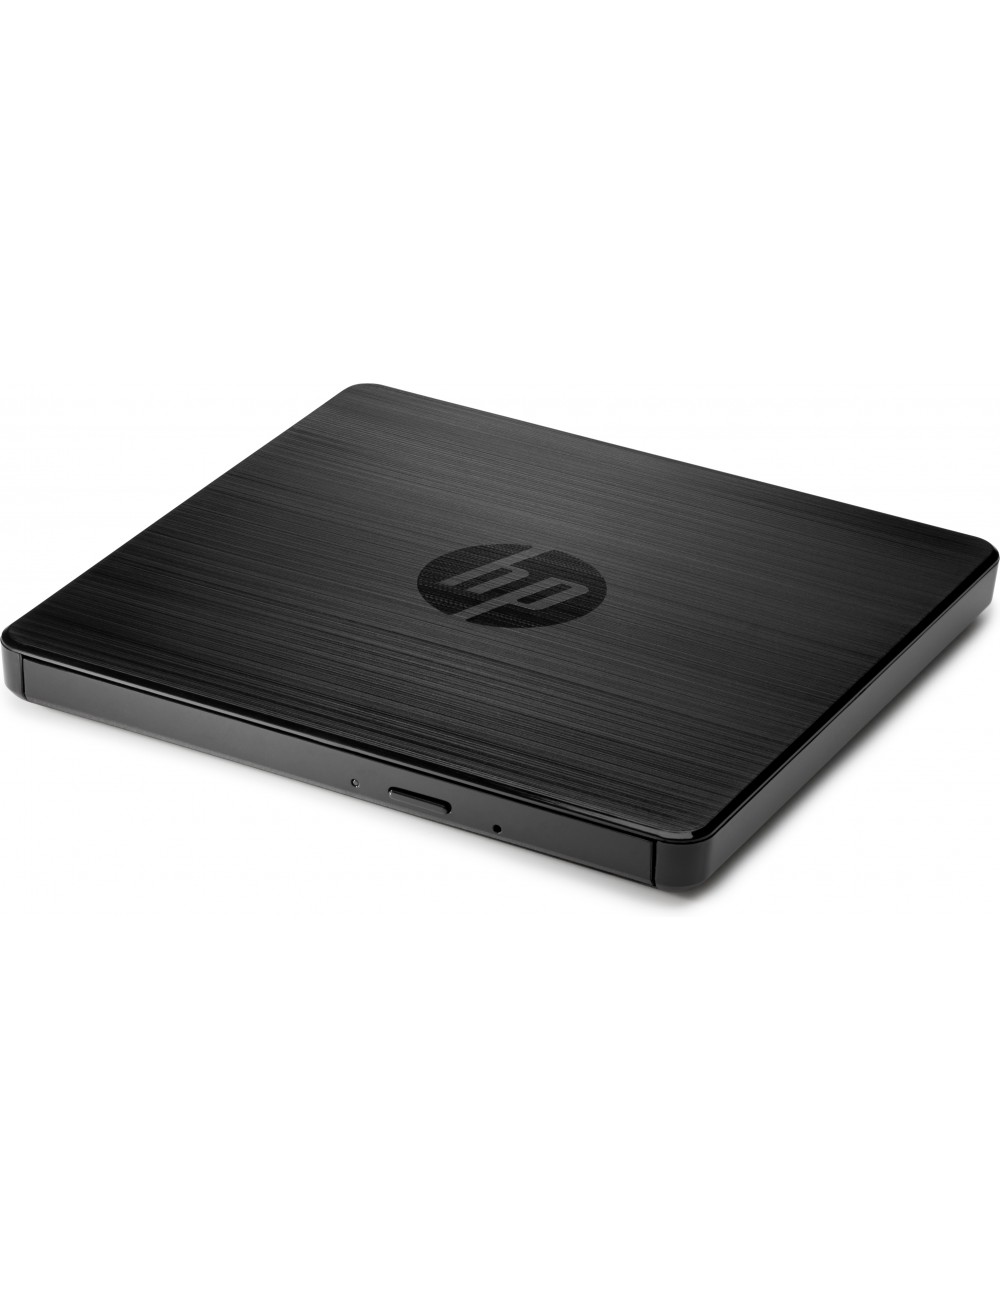 HP Graveur DVD-RW externe USB